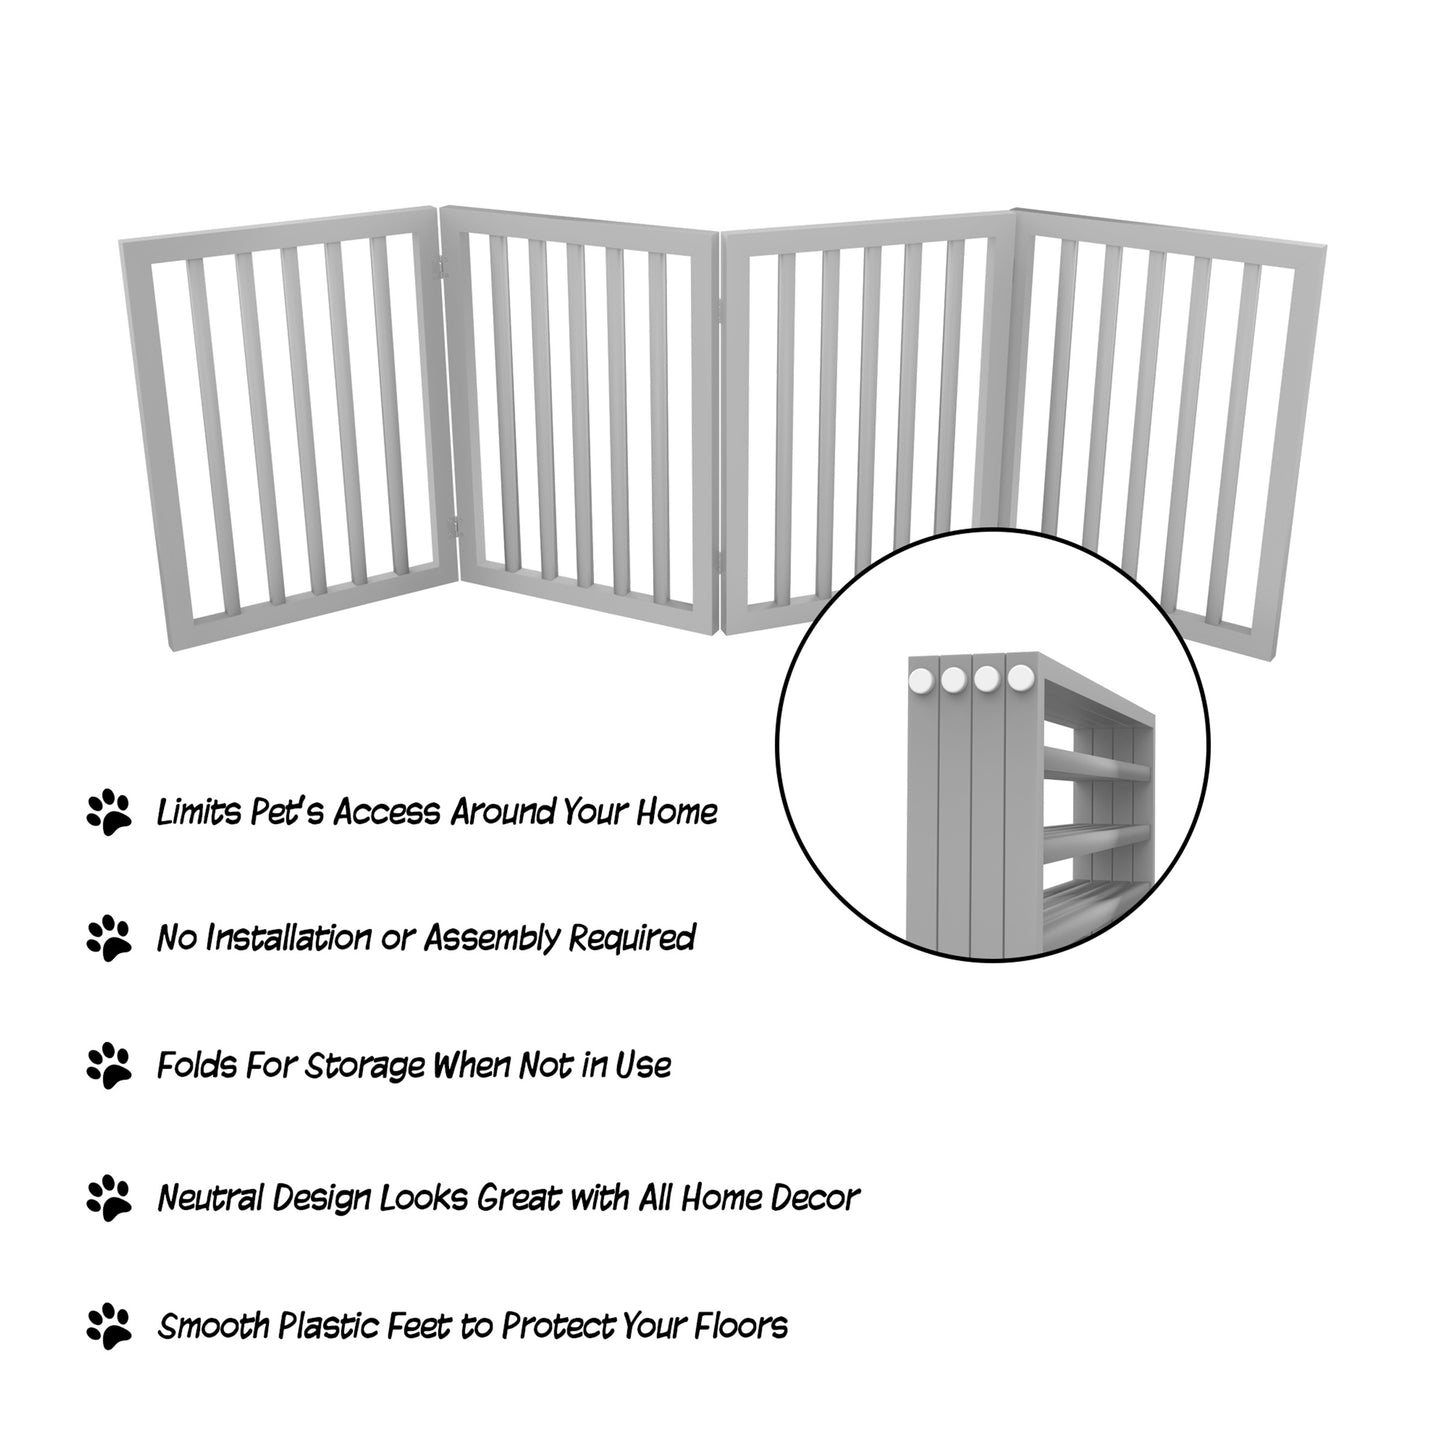 PETMAKER 4-Panel Indoor Foldable Pet Gate, Gray